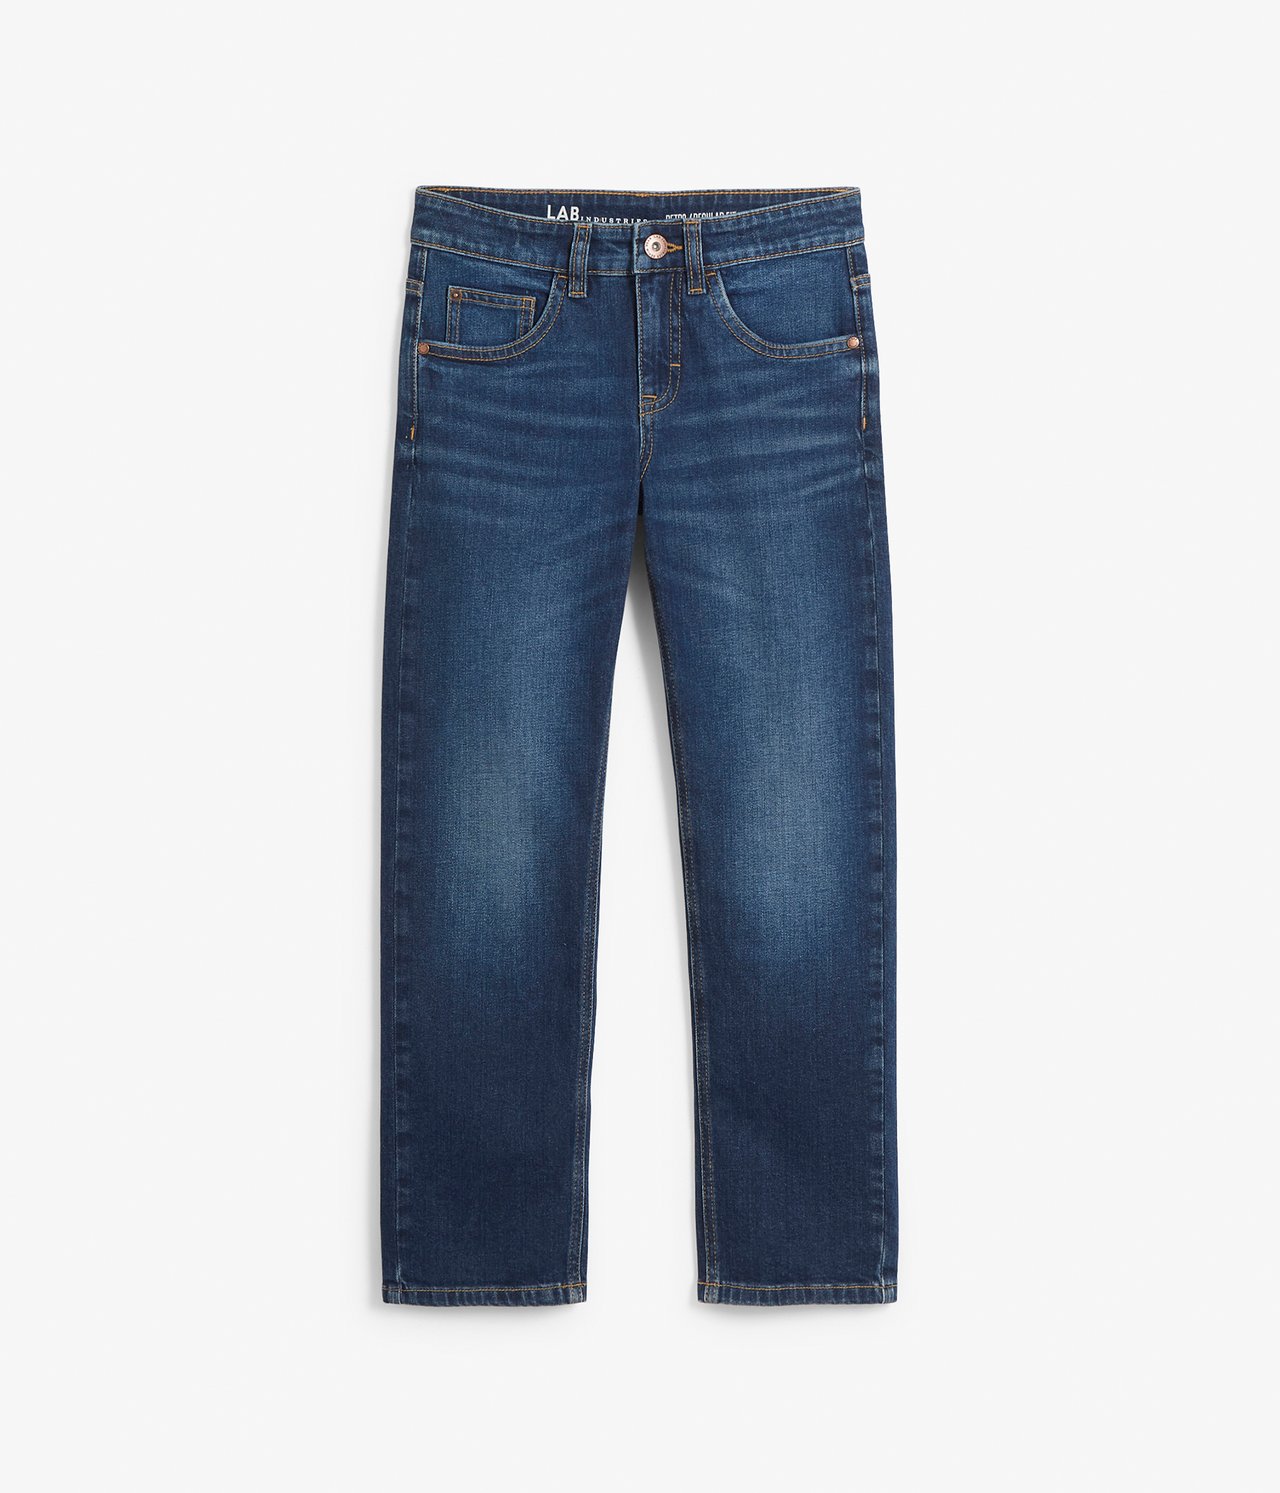 Retro jeans regular fit - Mörk denim - 2